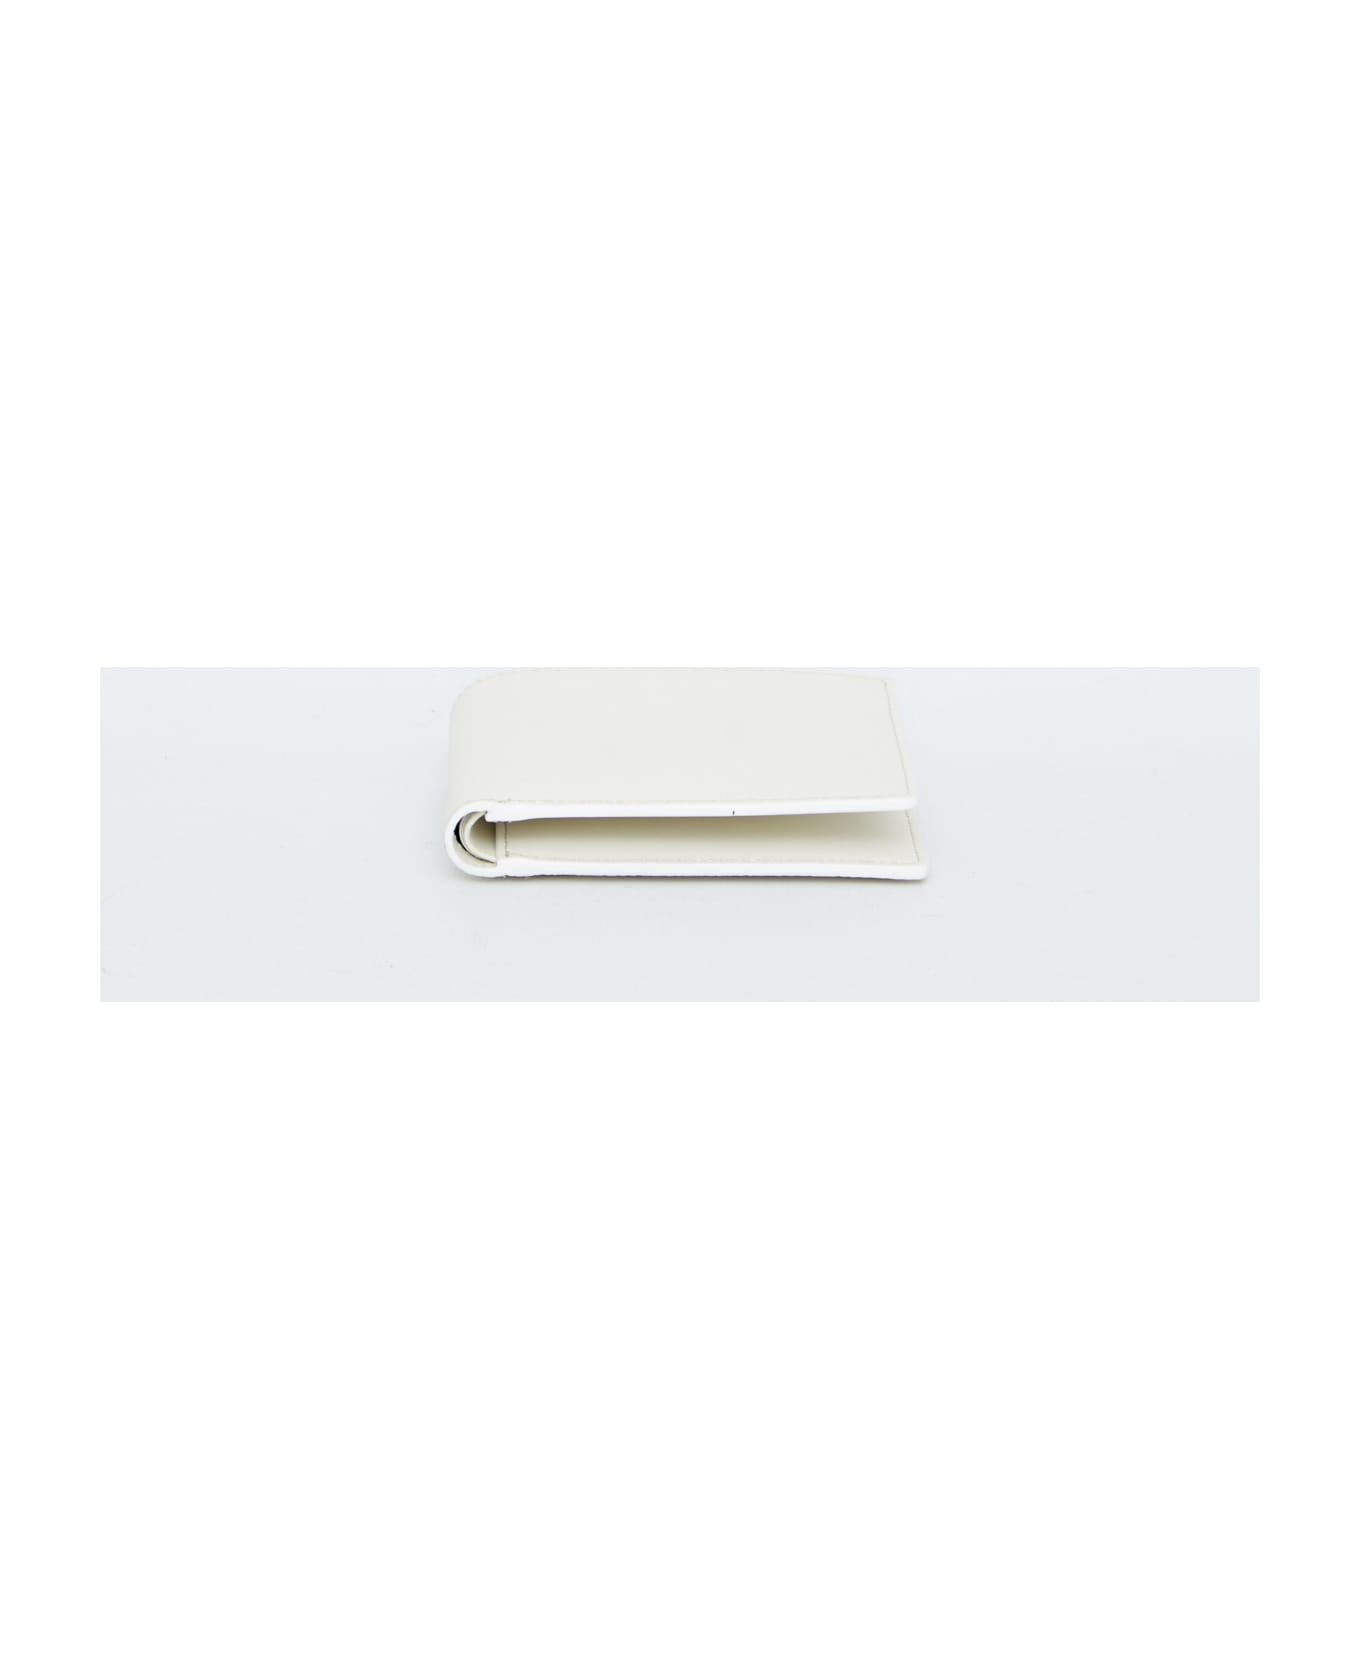 Maison Margiela White Bi-fold Wallet - WHITE